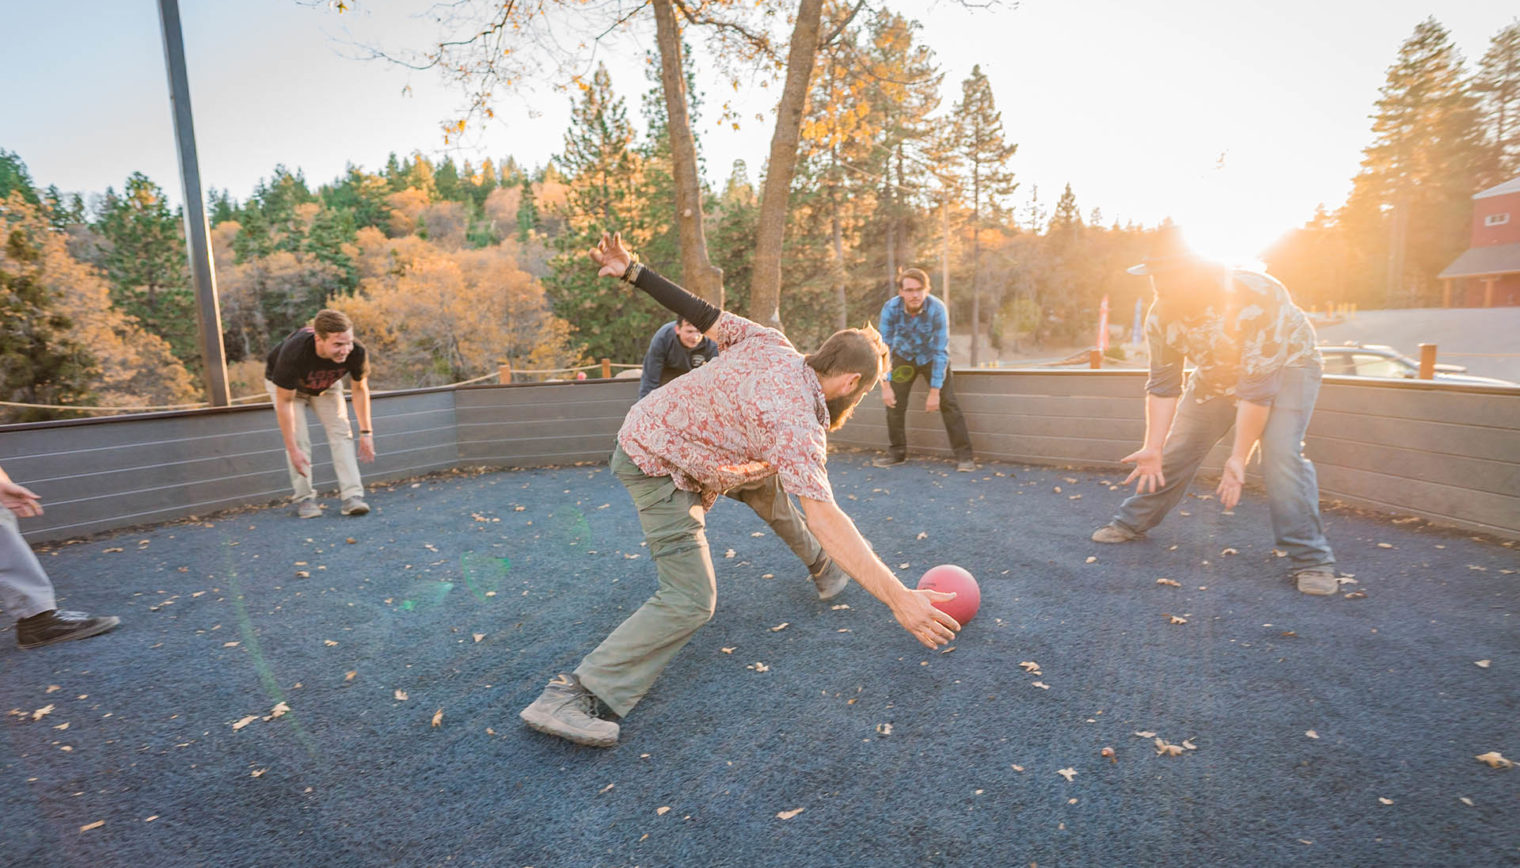 A group of people playing Gaga Ball.